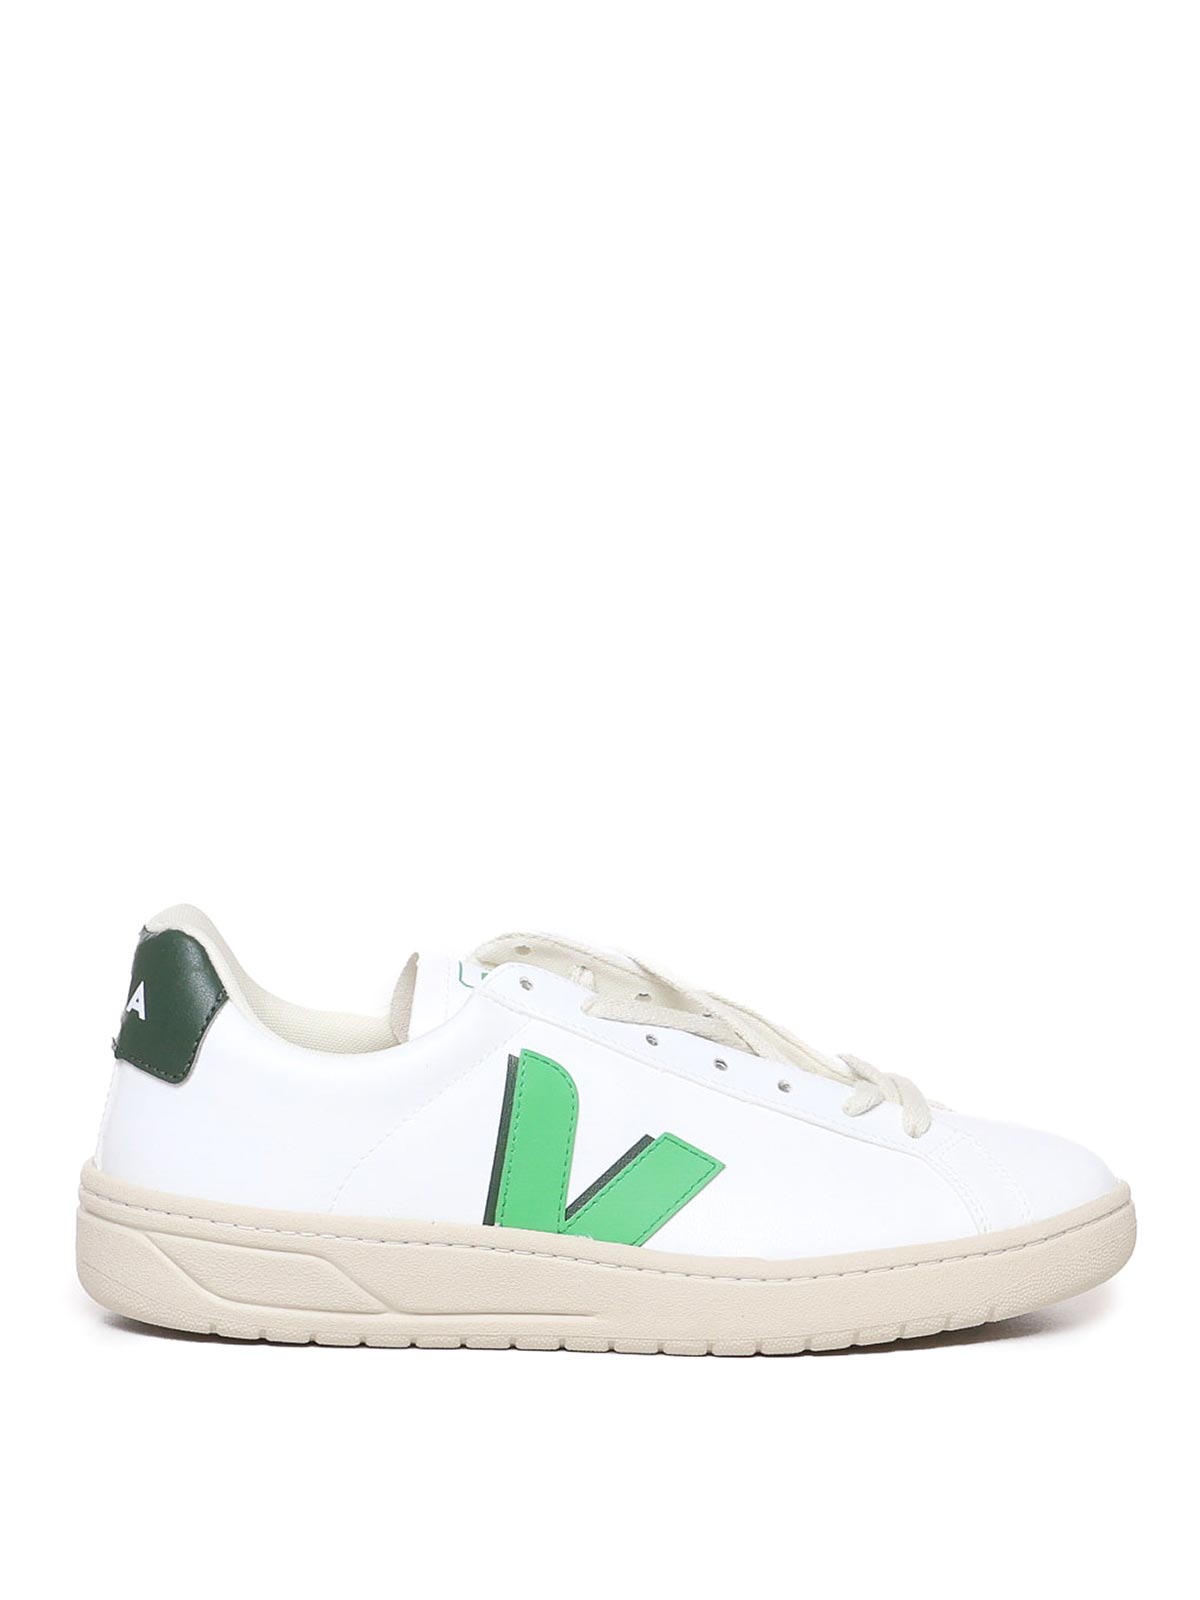 Shop Veja Urca Sneakers In Green